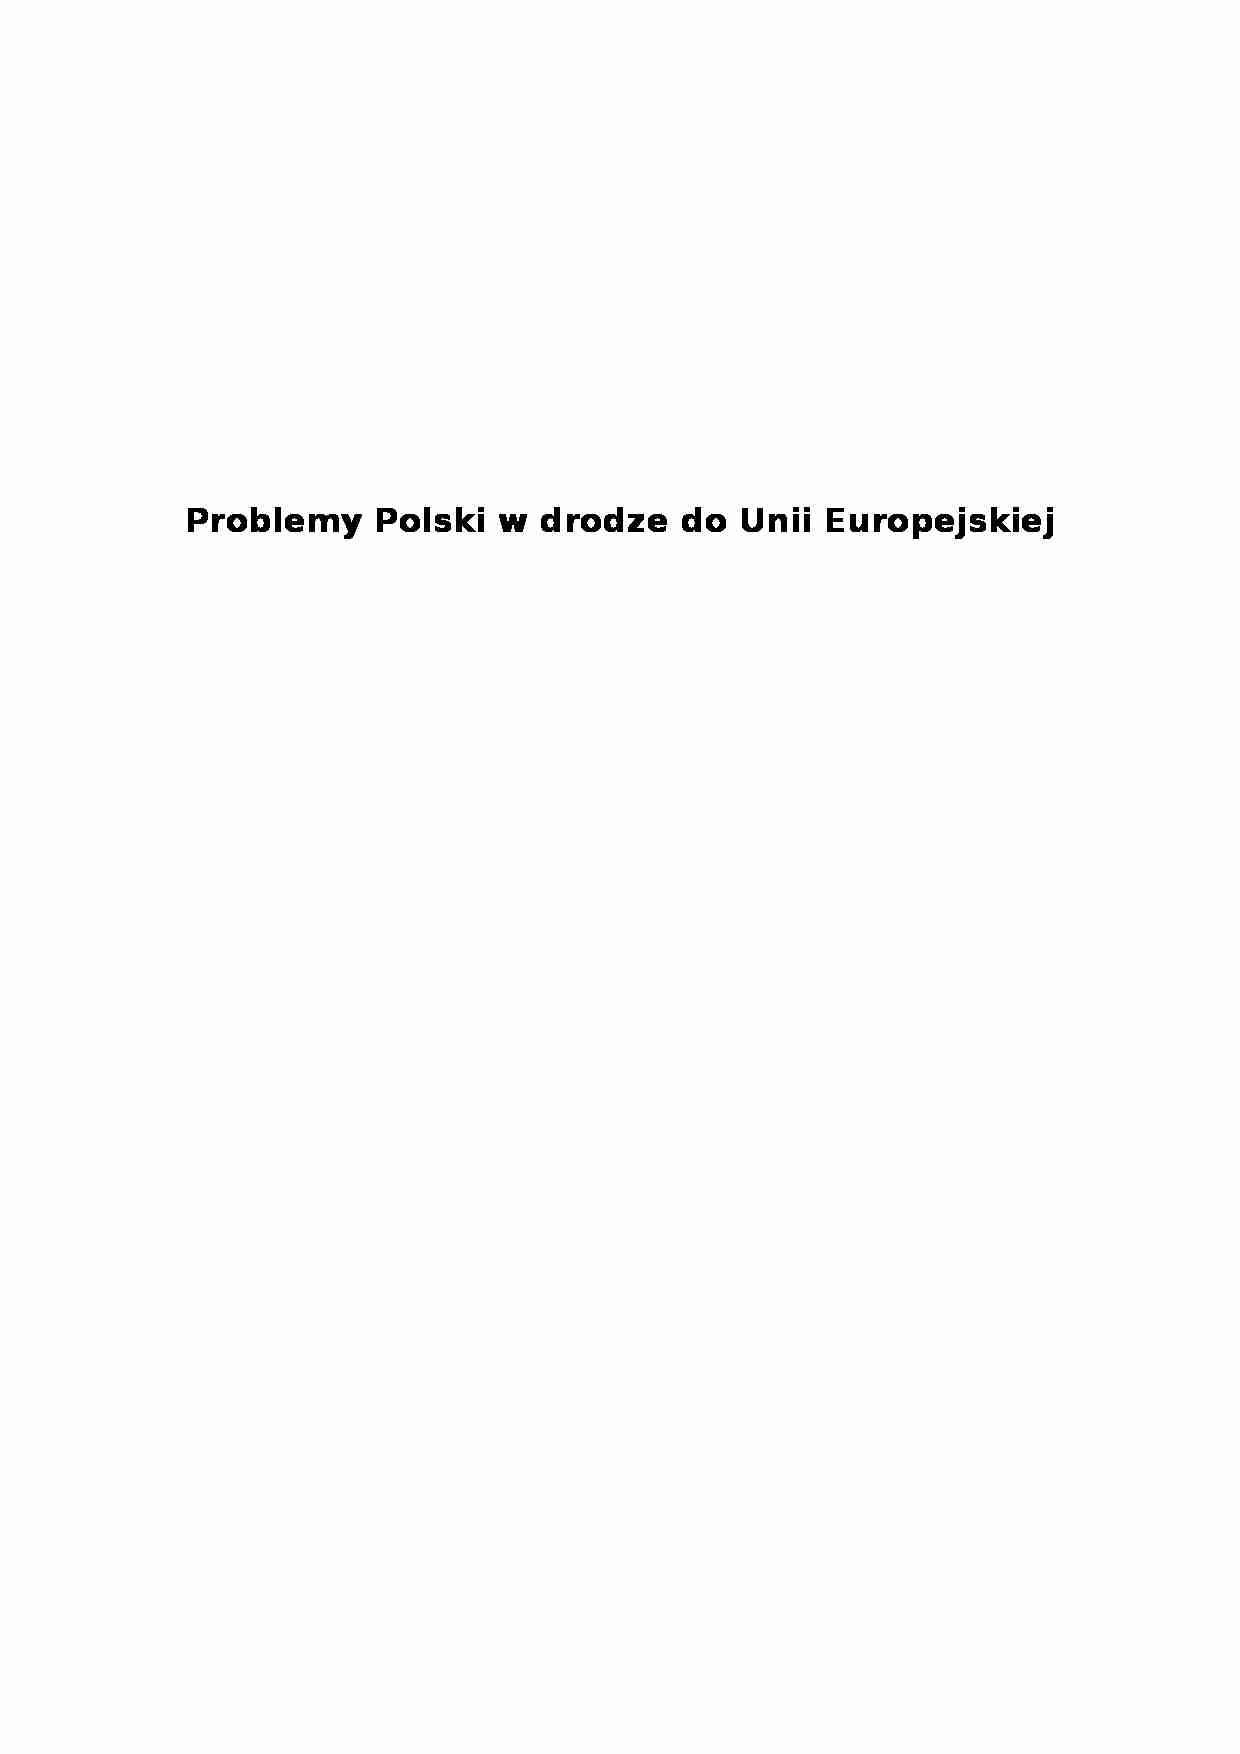 Droga Polski do UE - problemy  - strona 1